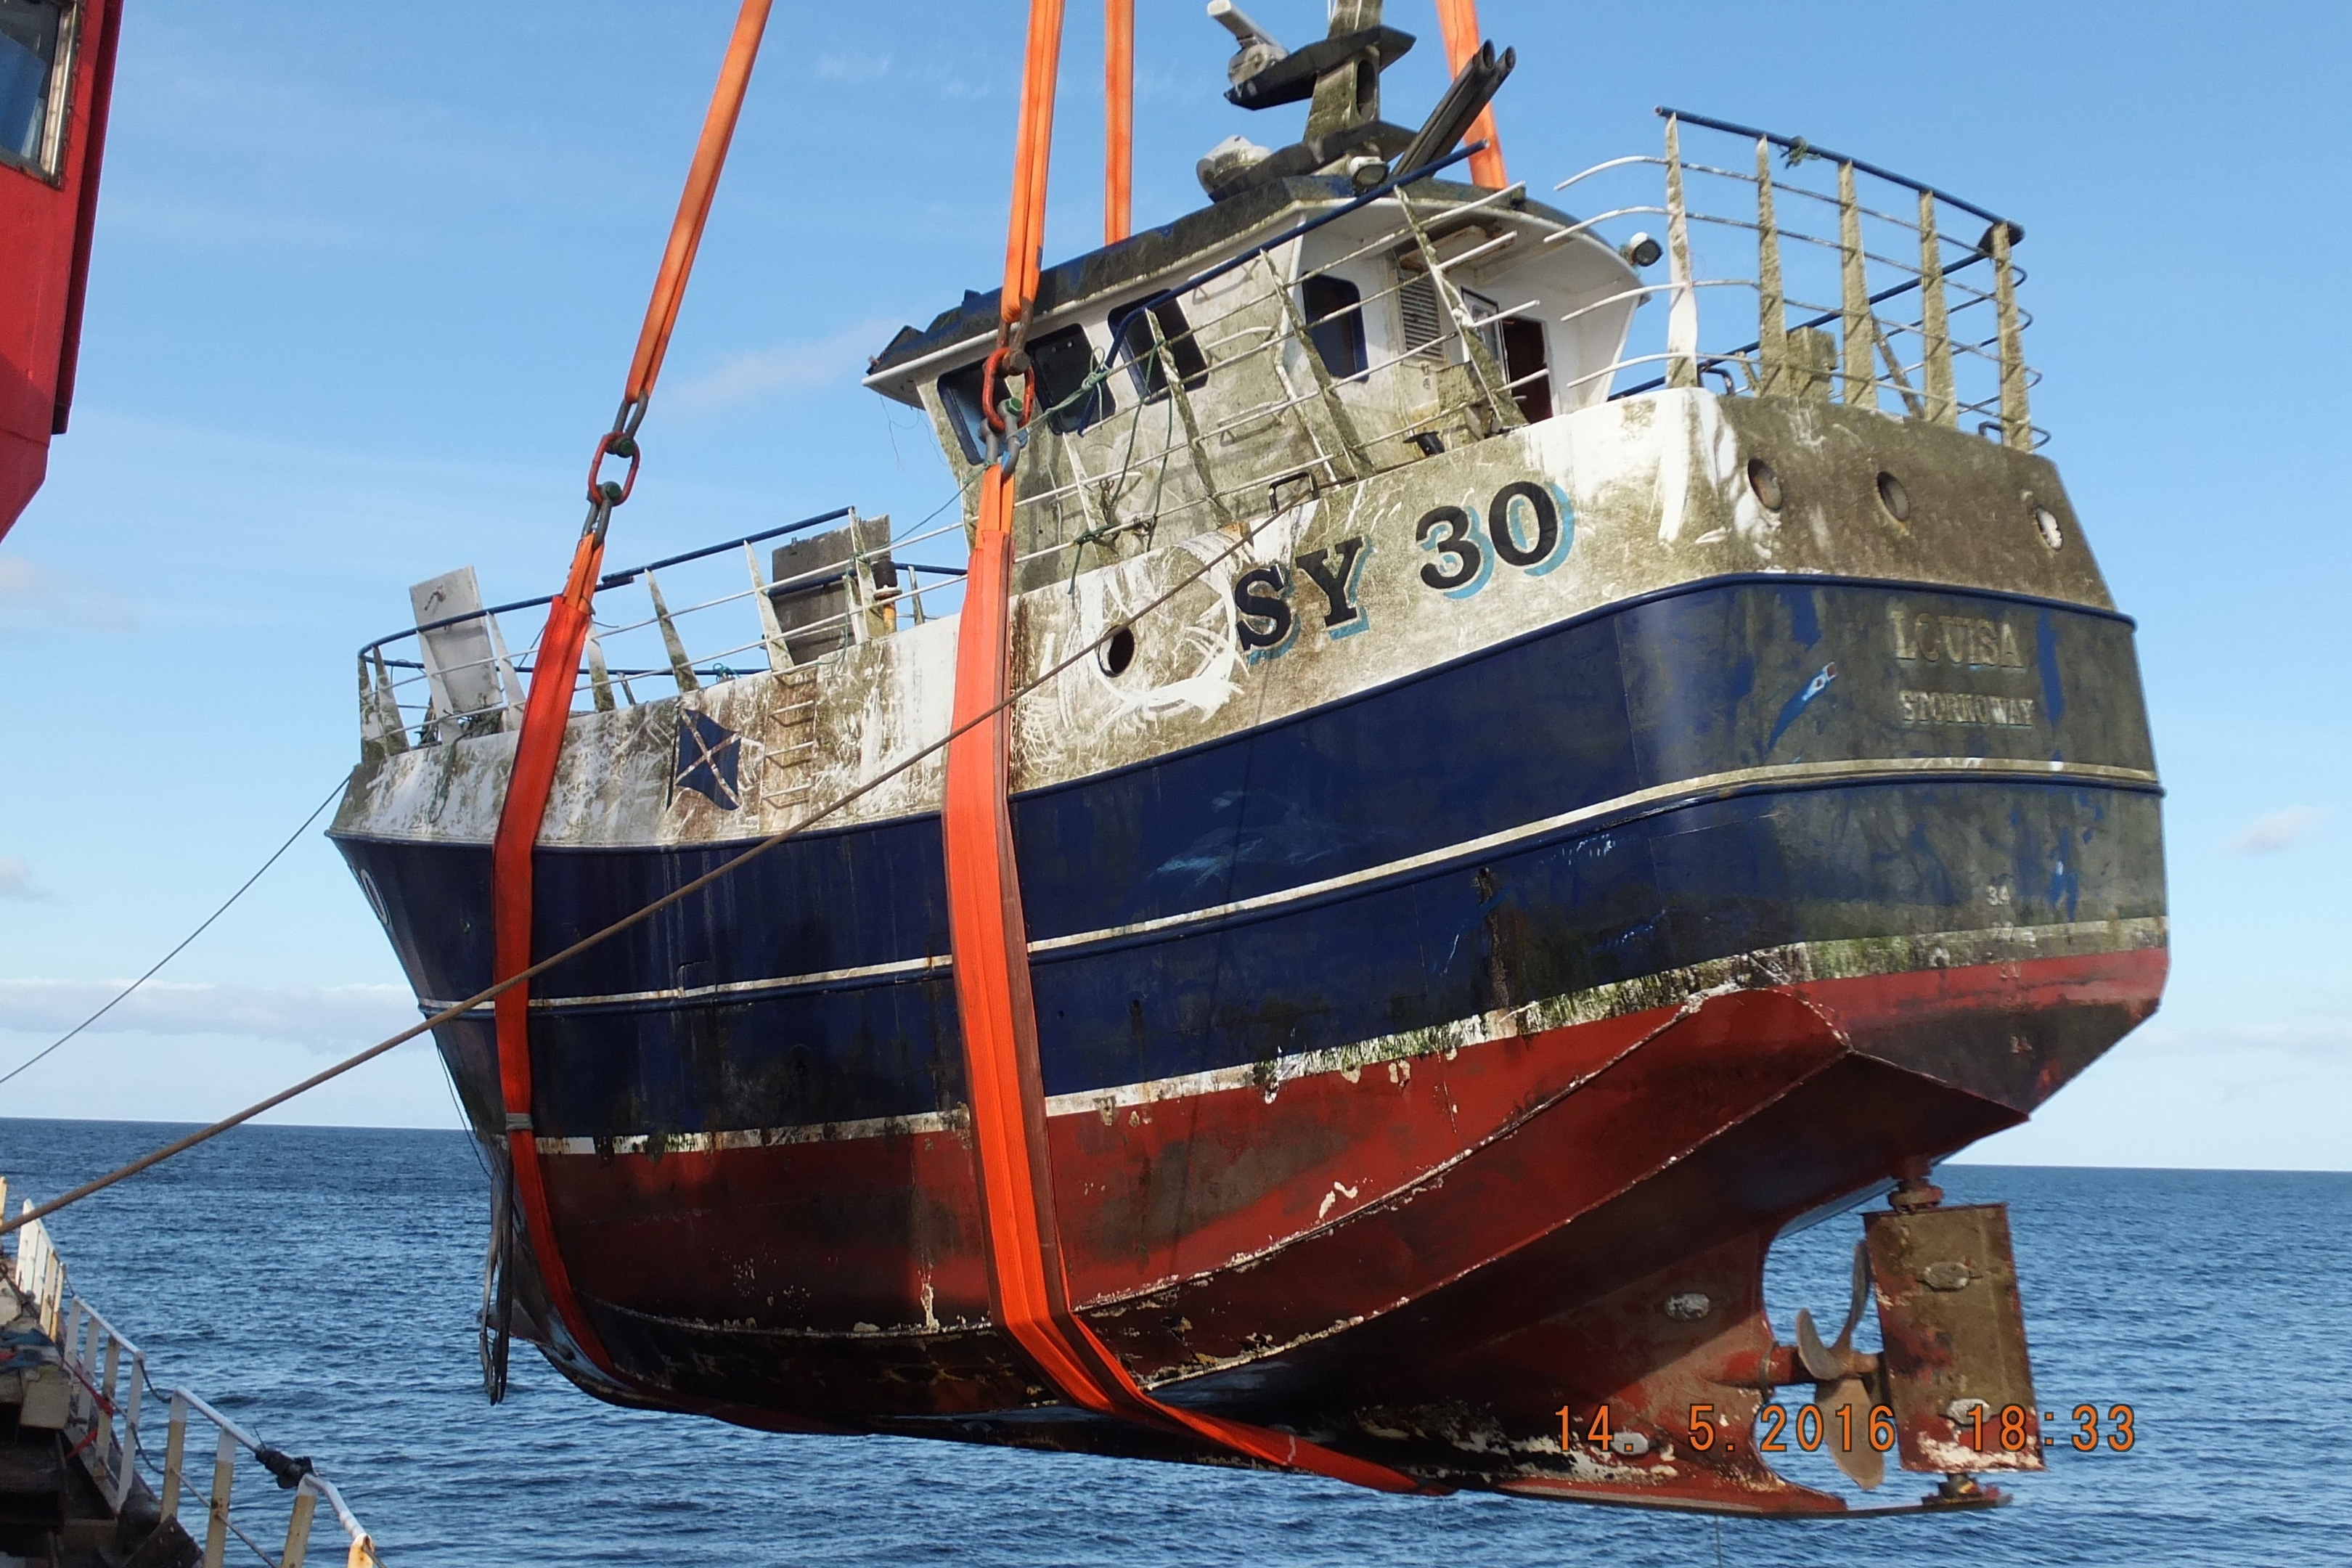 The fishing vessel Louisa